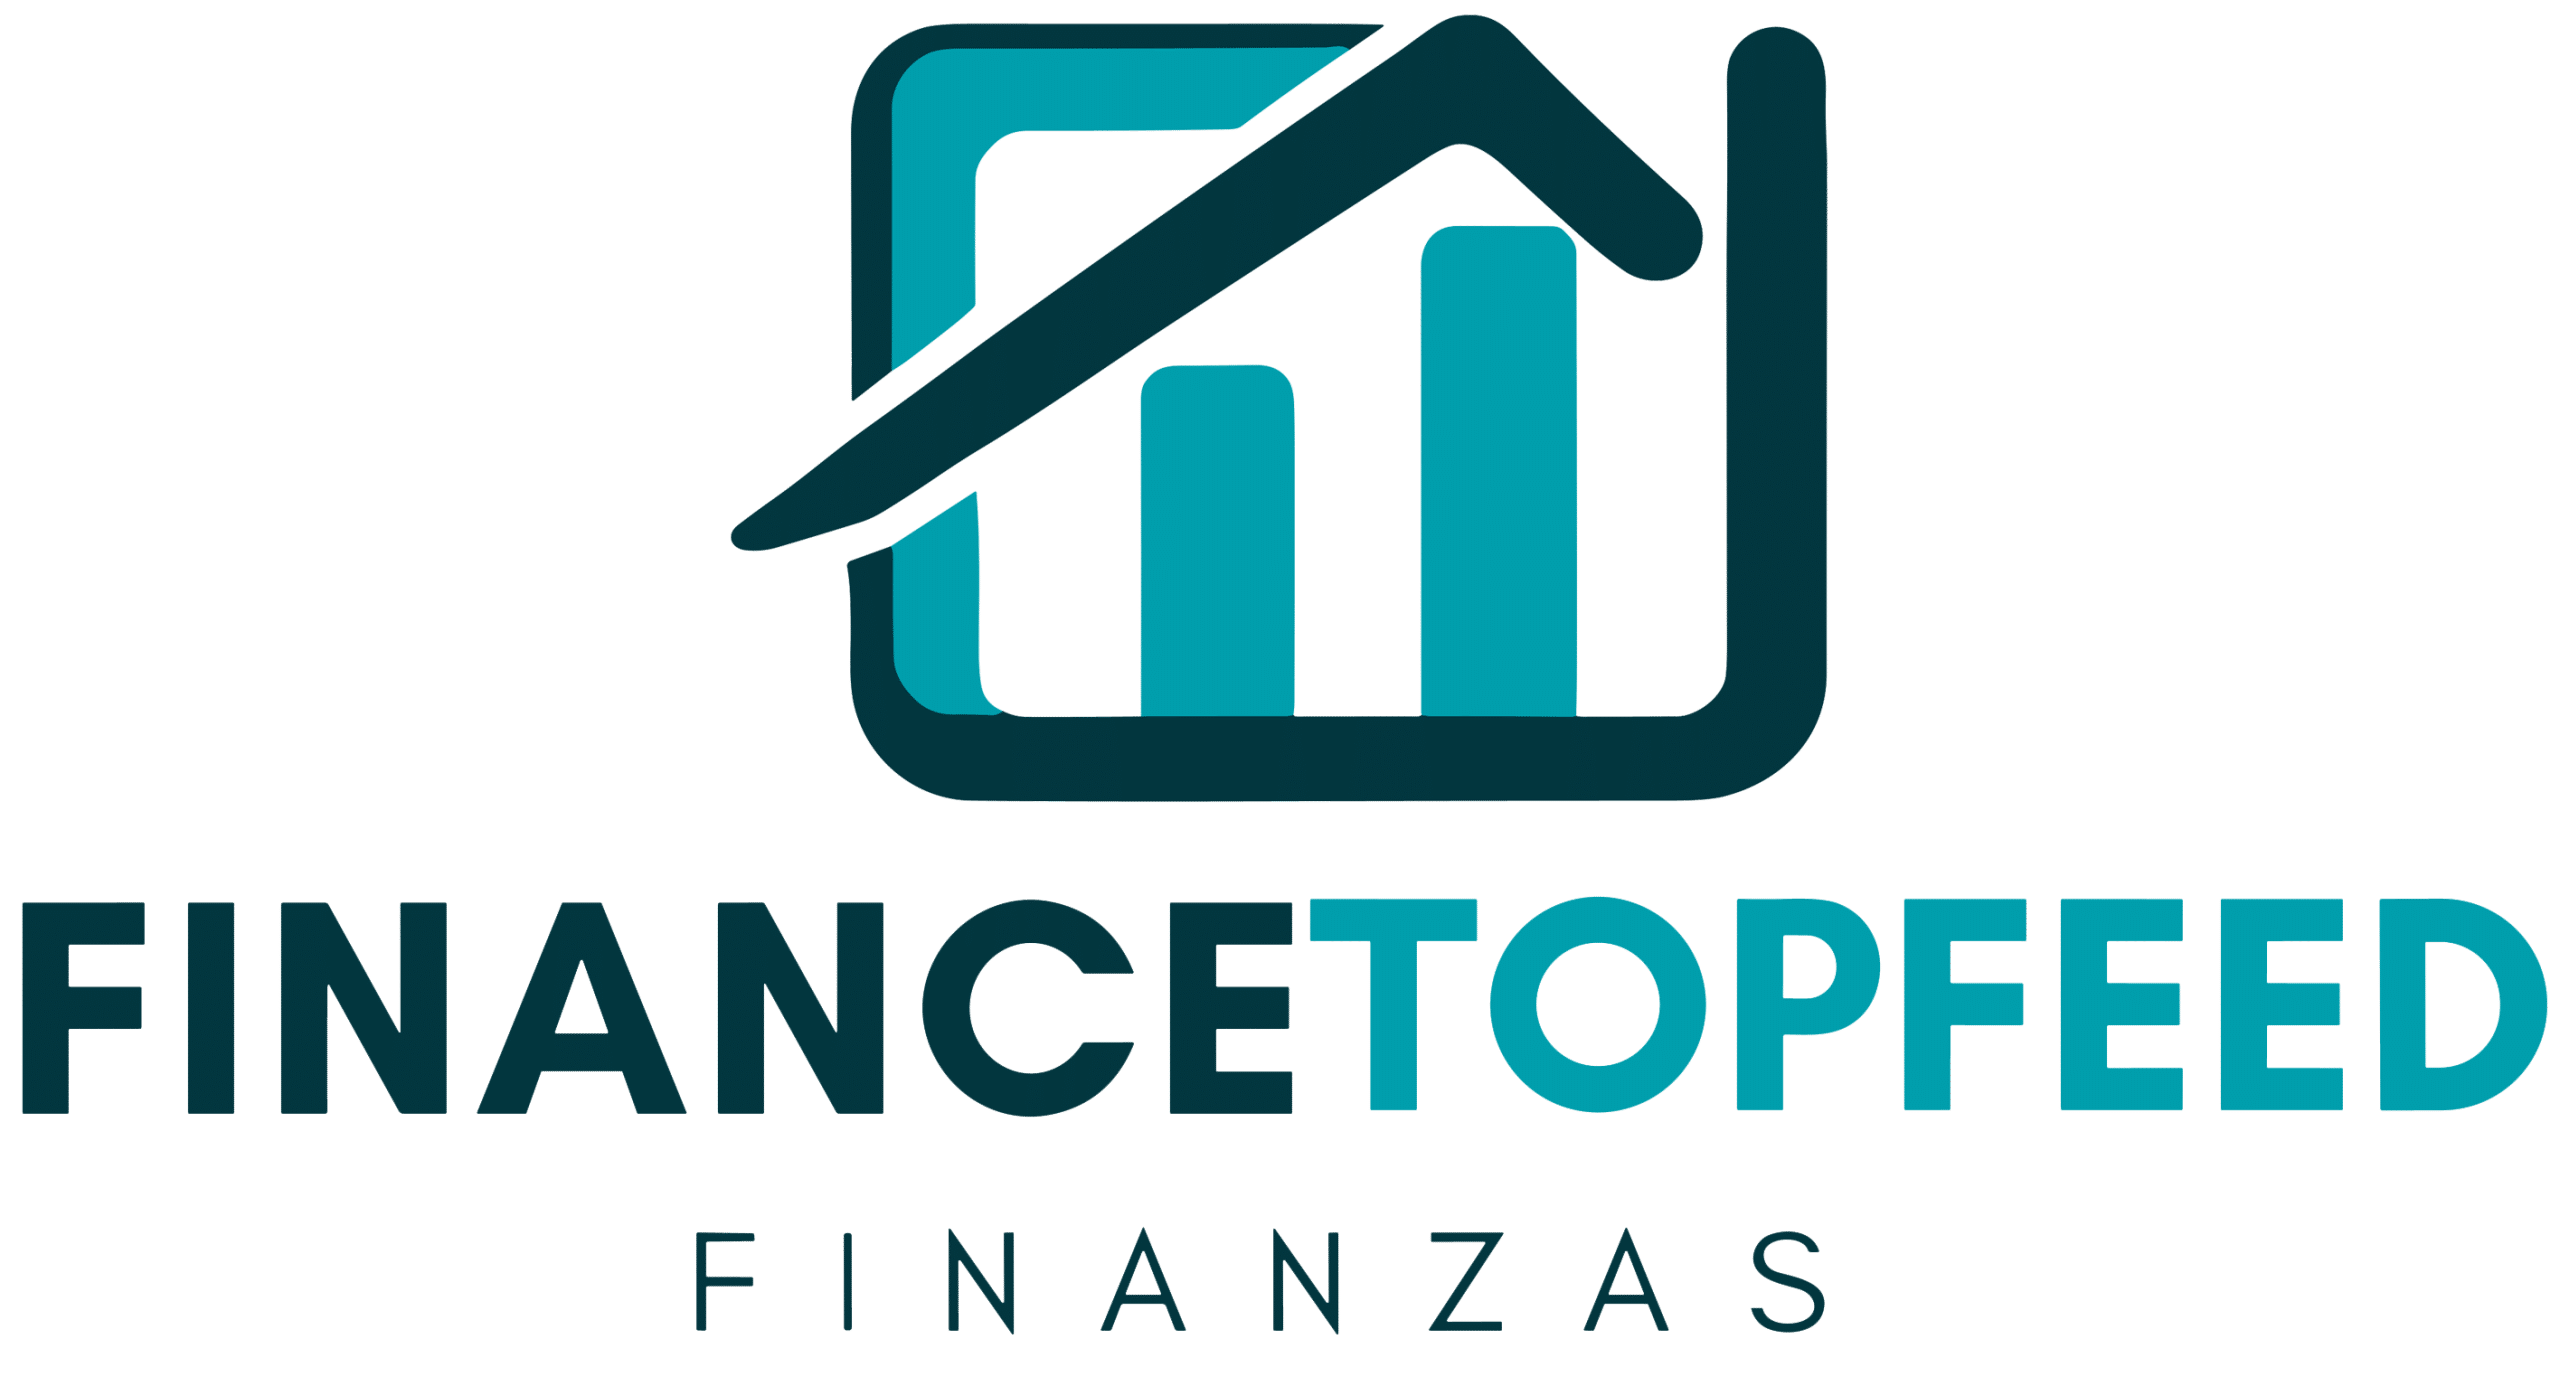 Finance TopFeed